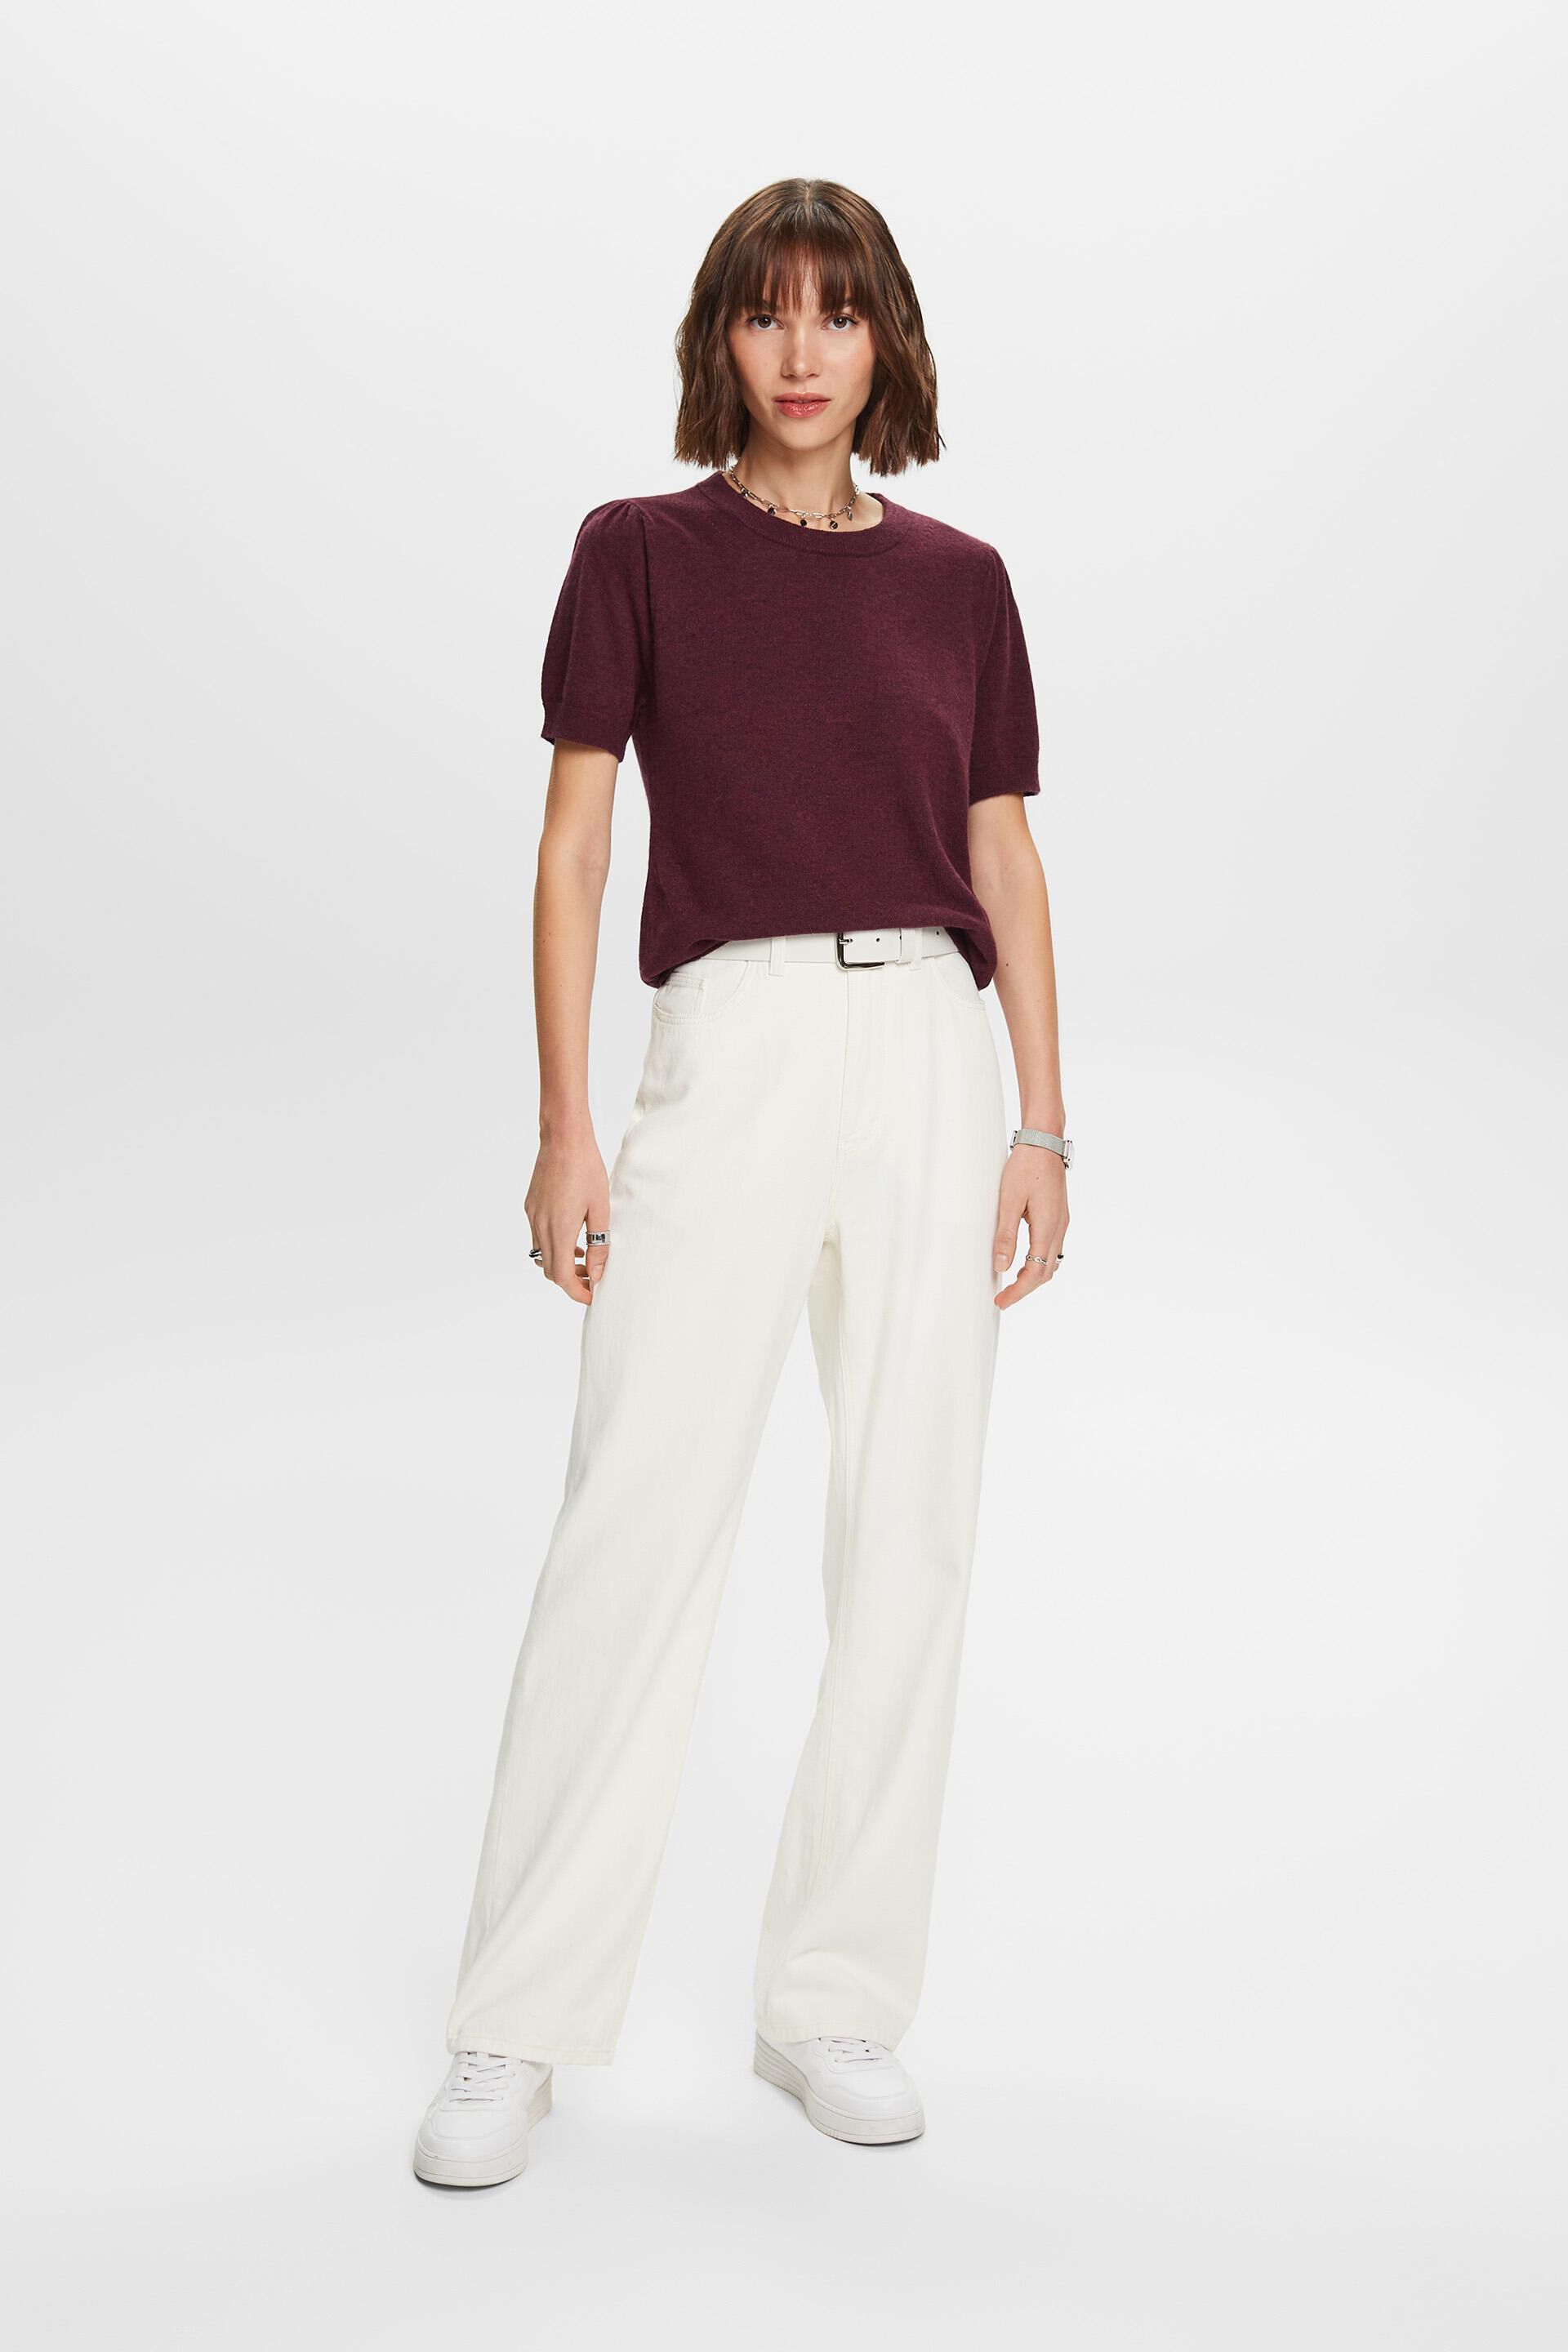 Esprit Damen With cashmere: short sleeve jumper